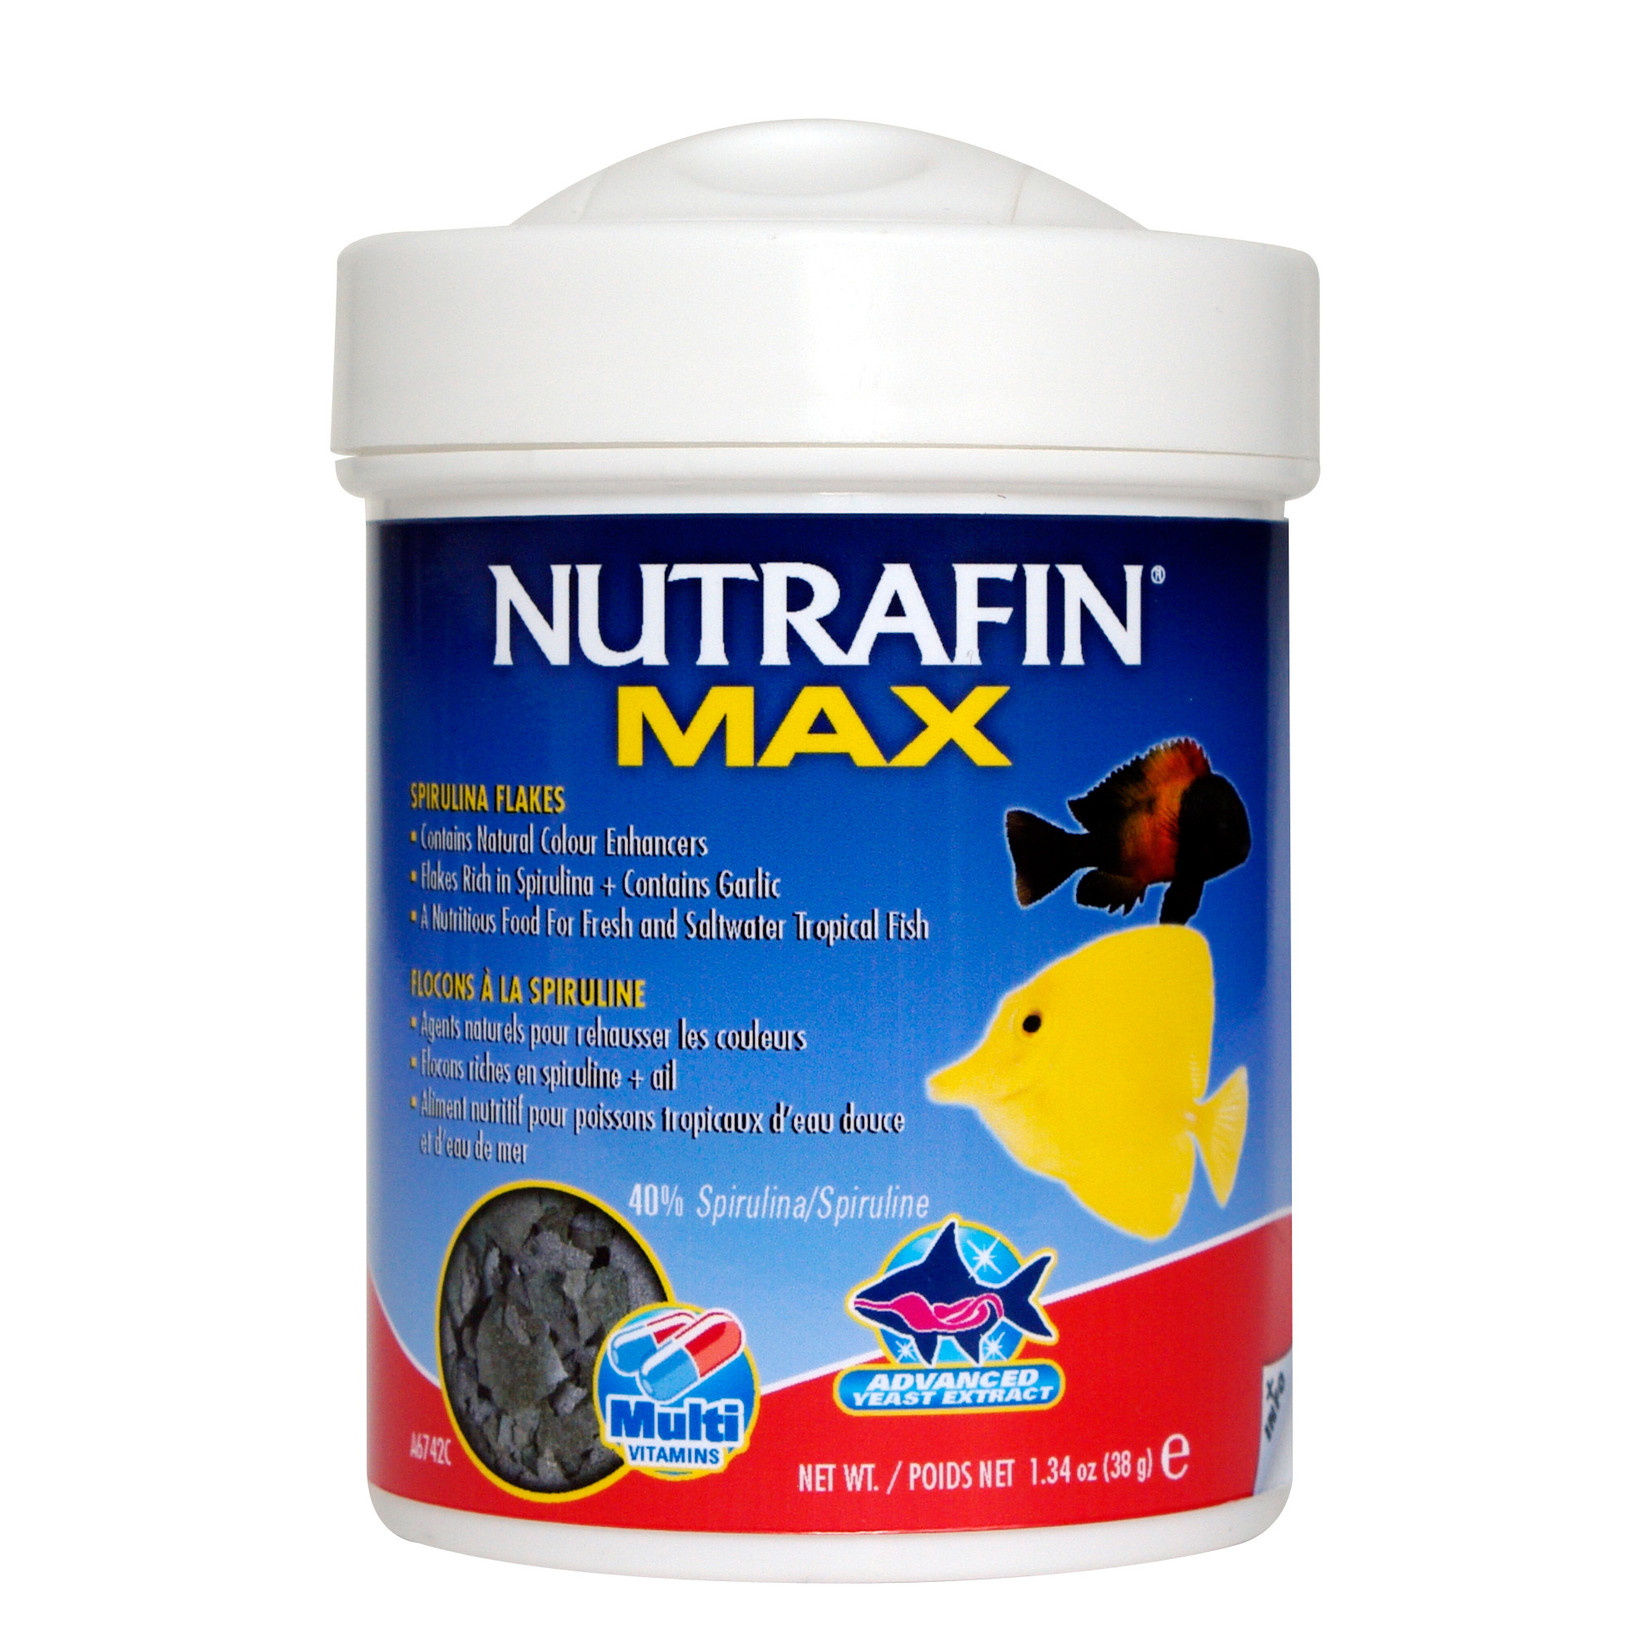 NUTRAFIN (W) NFM Spirulina Flakes, 38g (1.34oz)-V